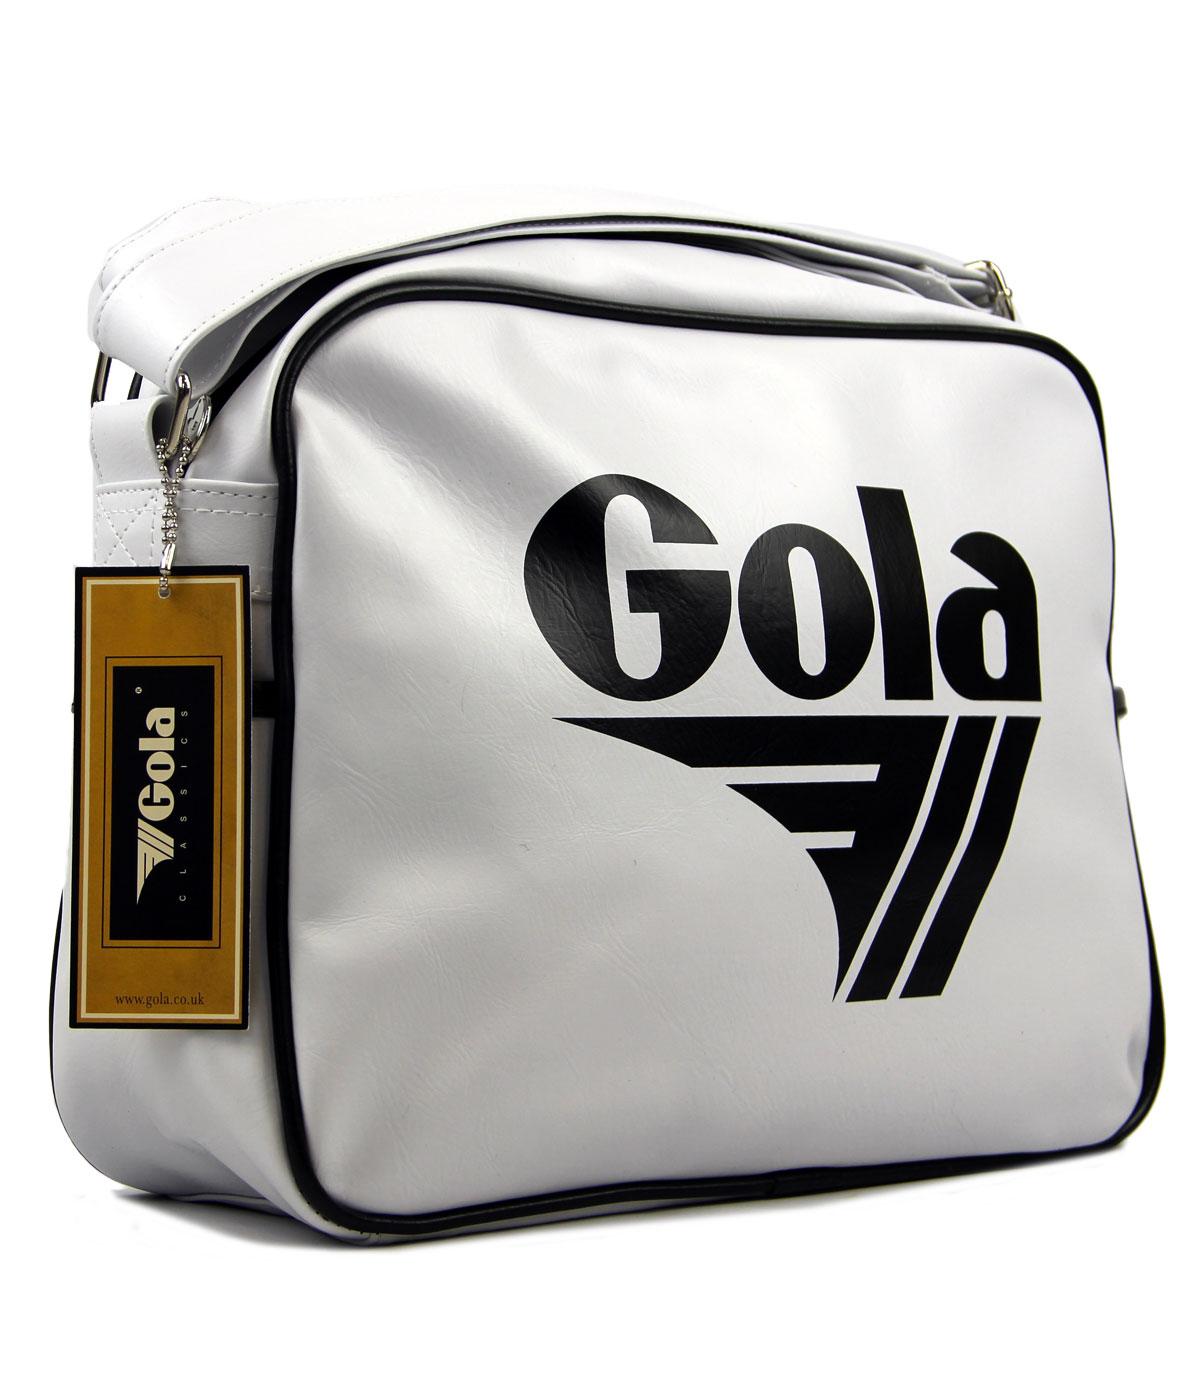 Buy Gola Redford messenger bags in white/red online at gola.co.uk